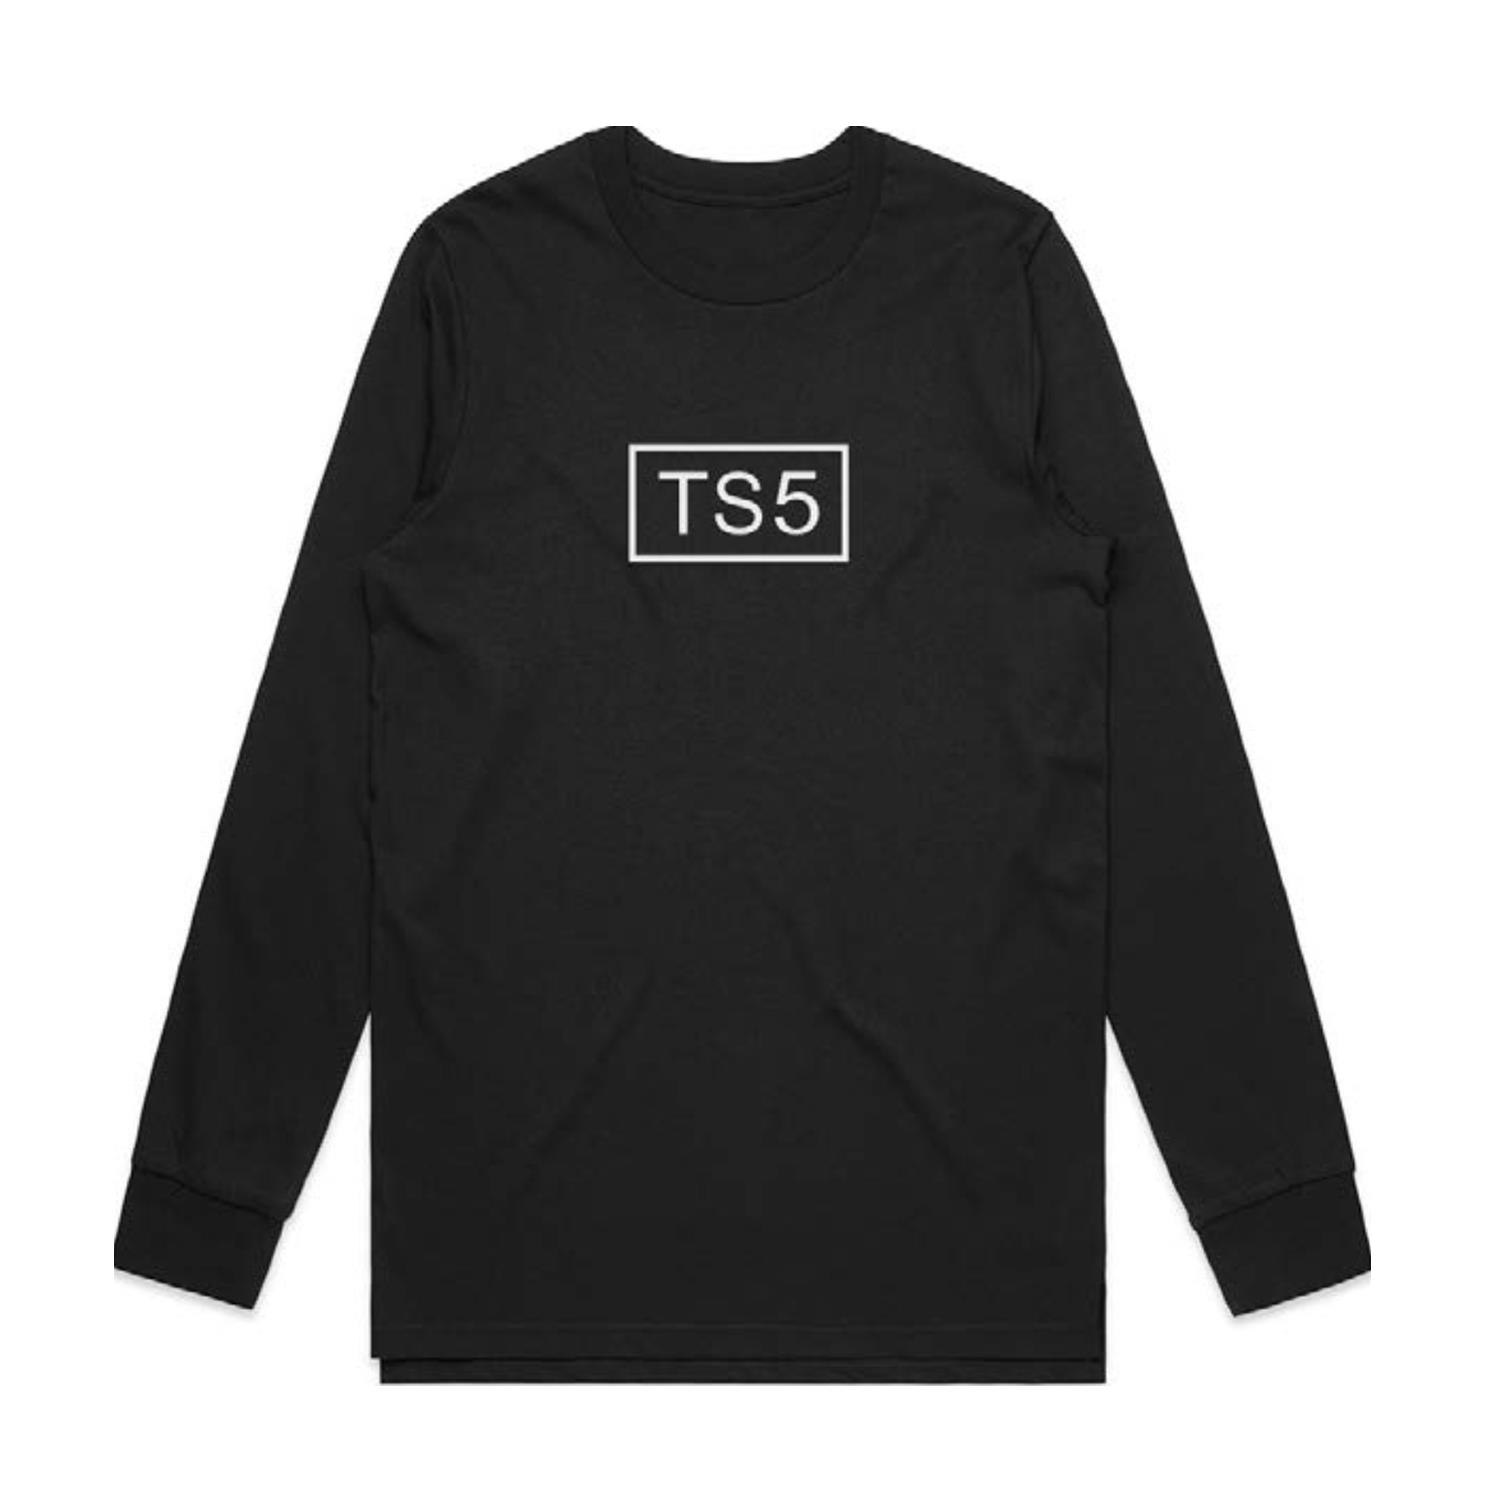 Craig David - TS5 Black Long Sleeve T-Shirt